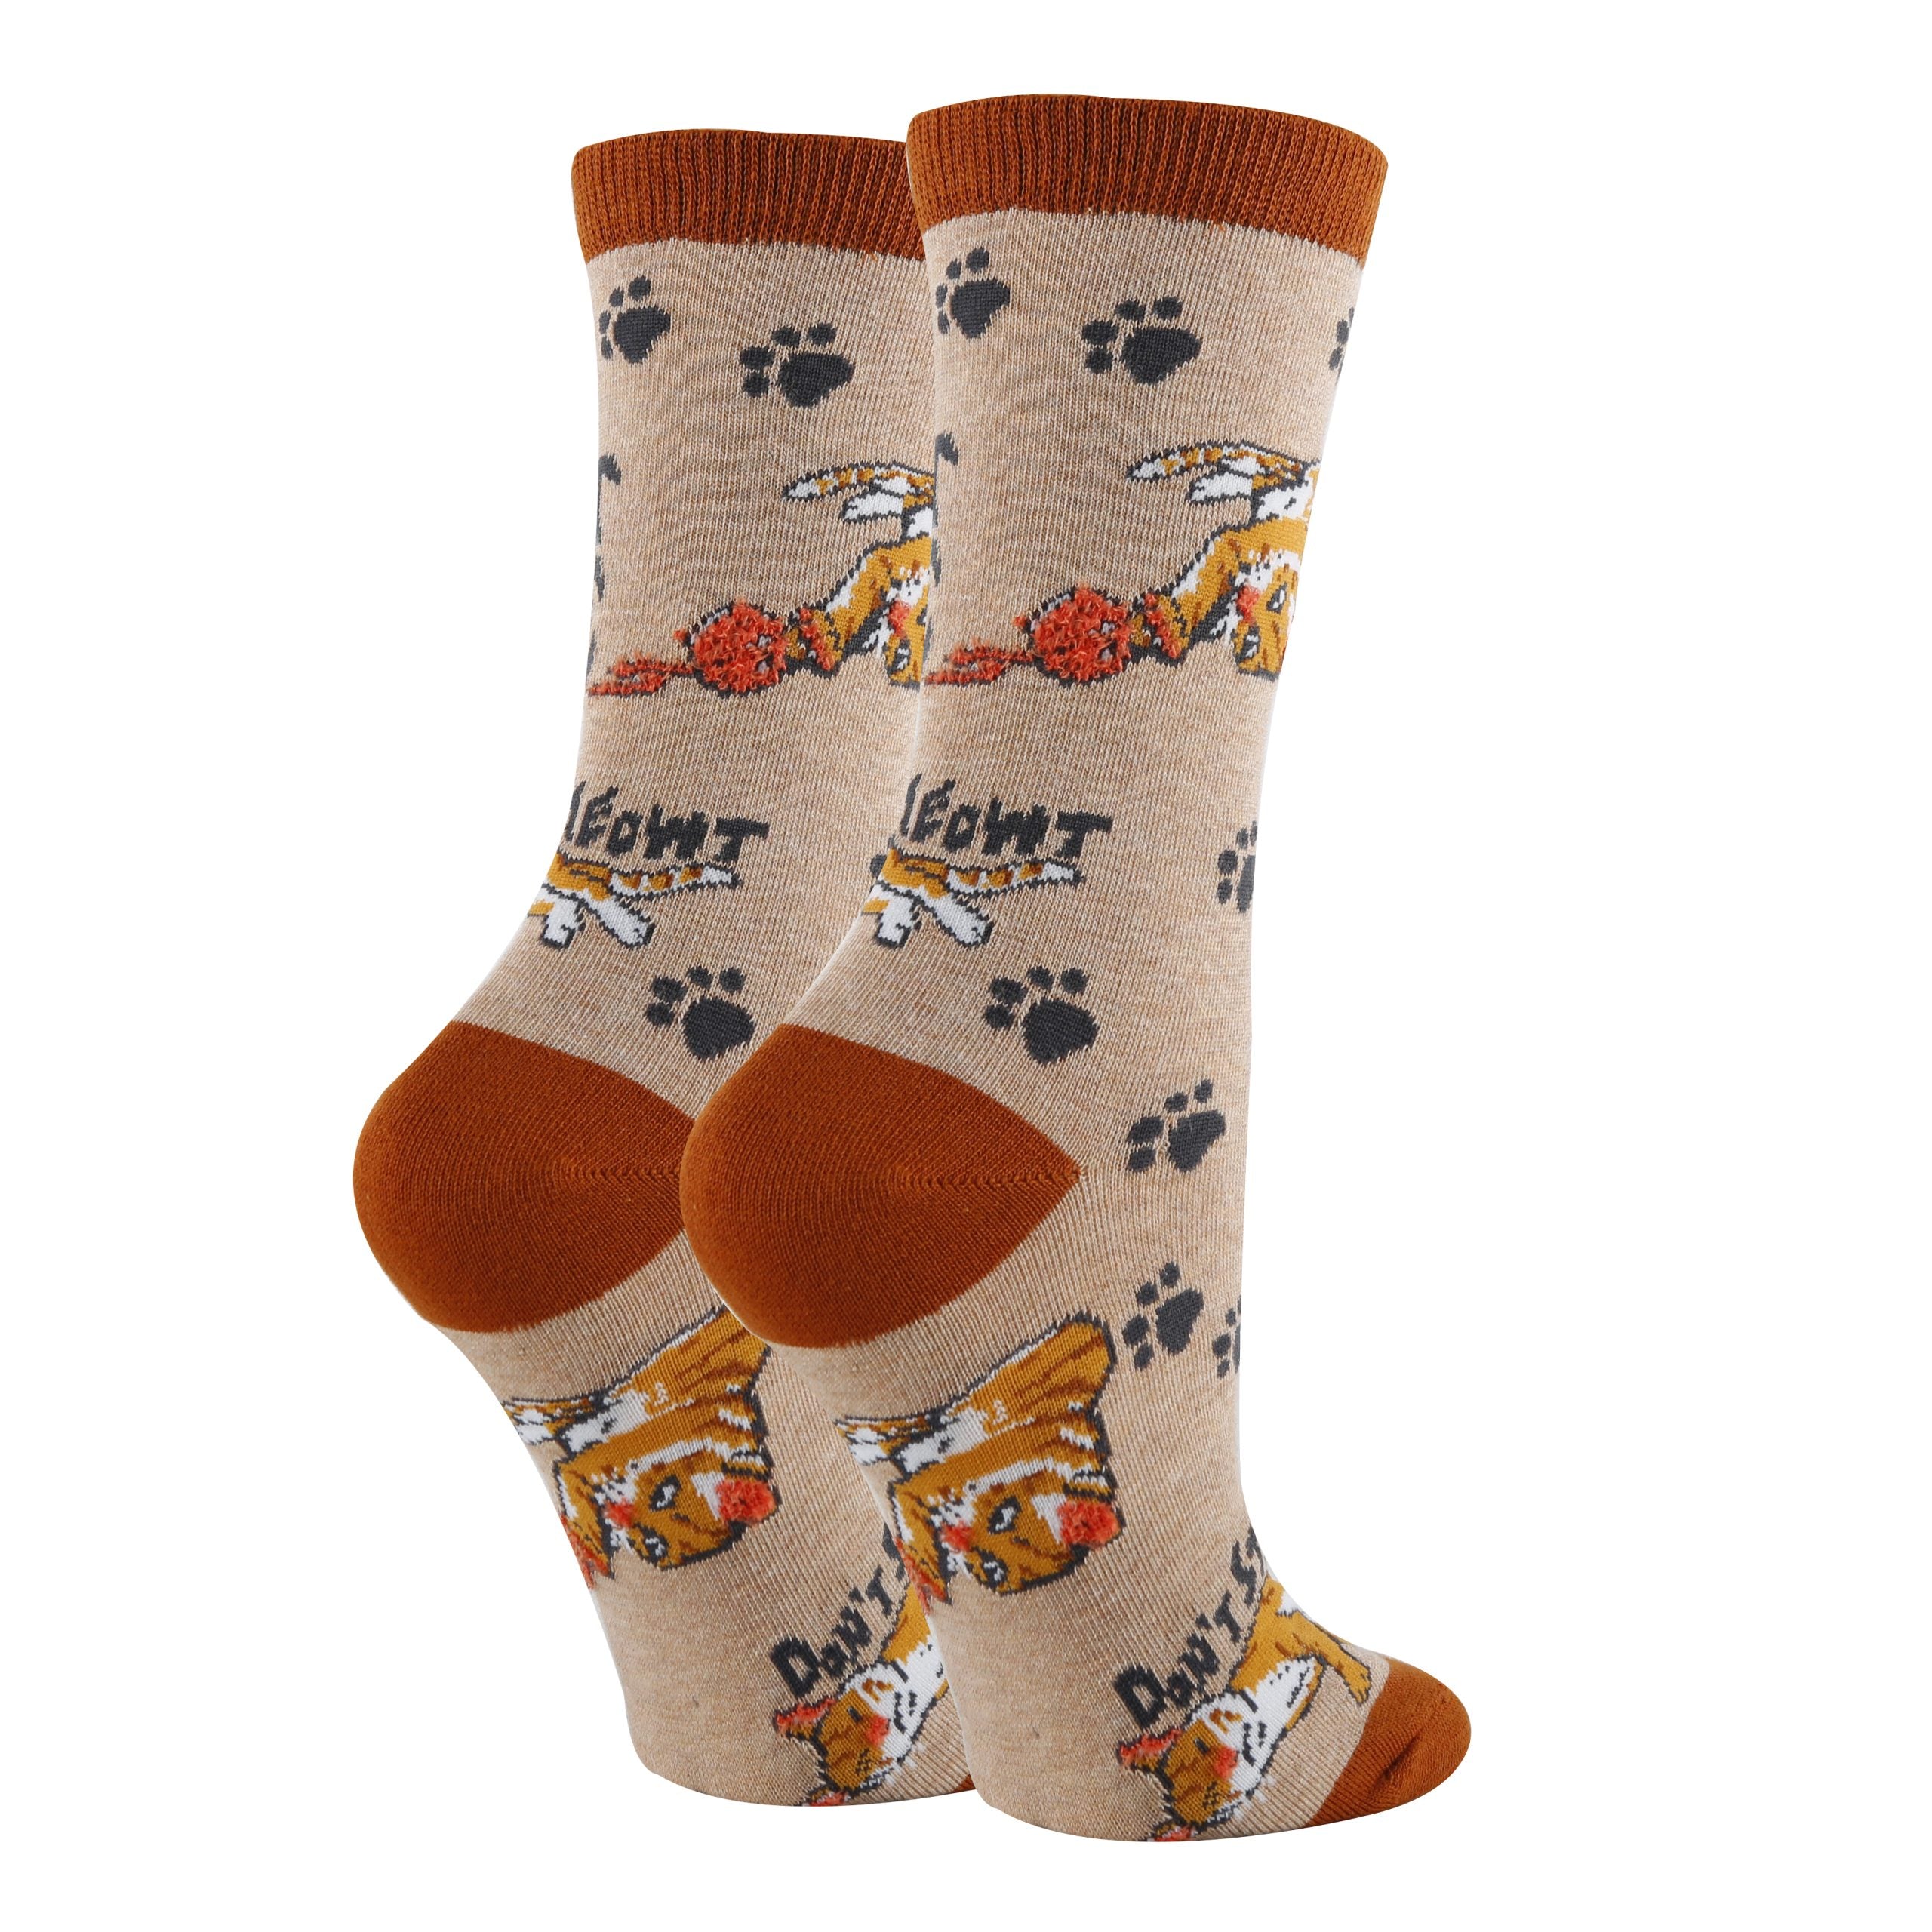 Cat Socks  Fun Socks With Kitties for Crazy Cat Ladies & Guys